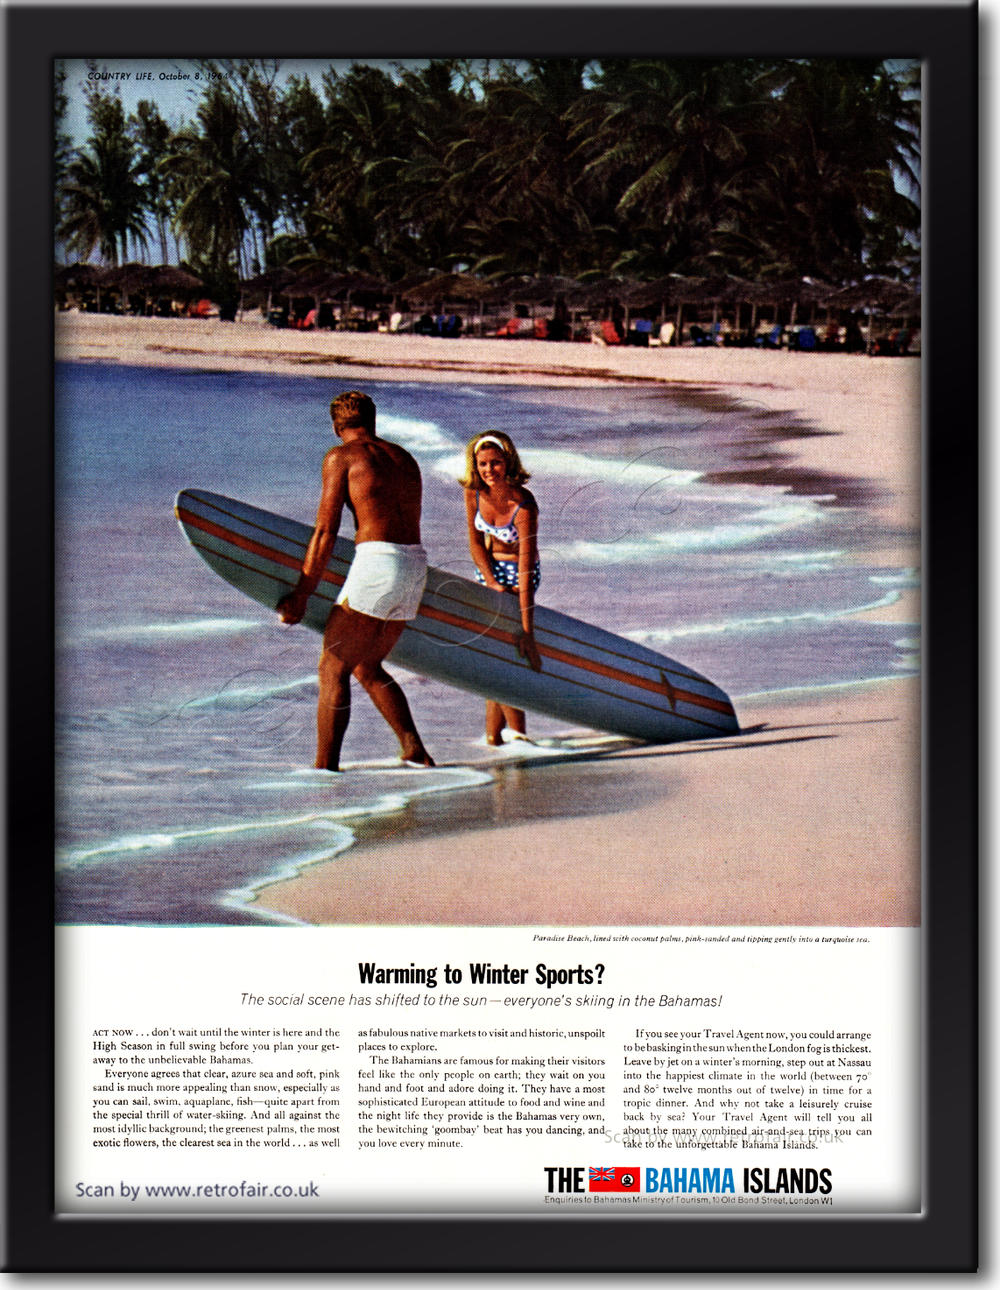 1964 vintage Bahama Islands Surfing advert